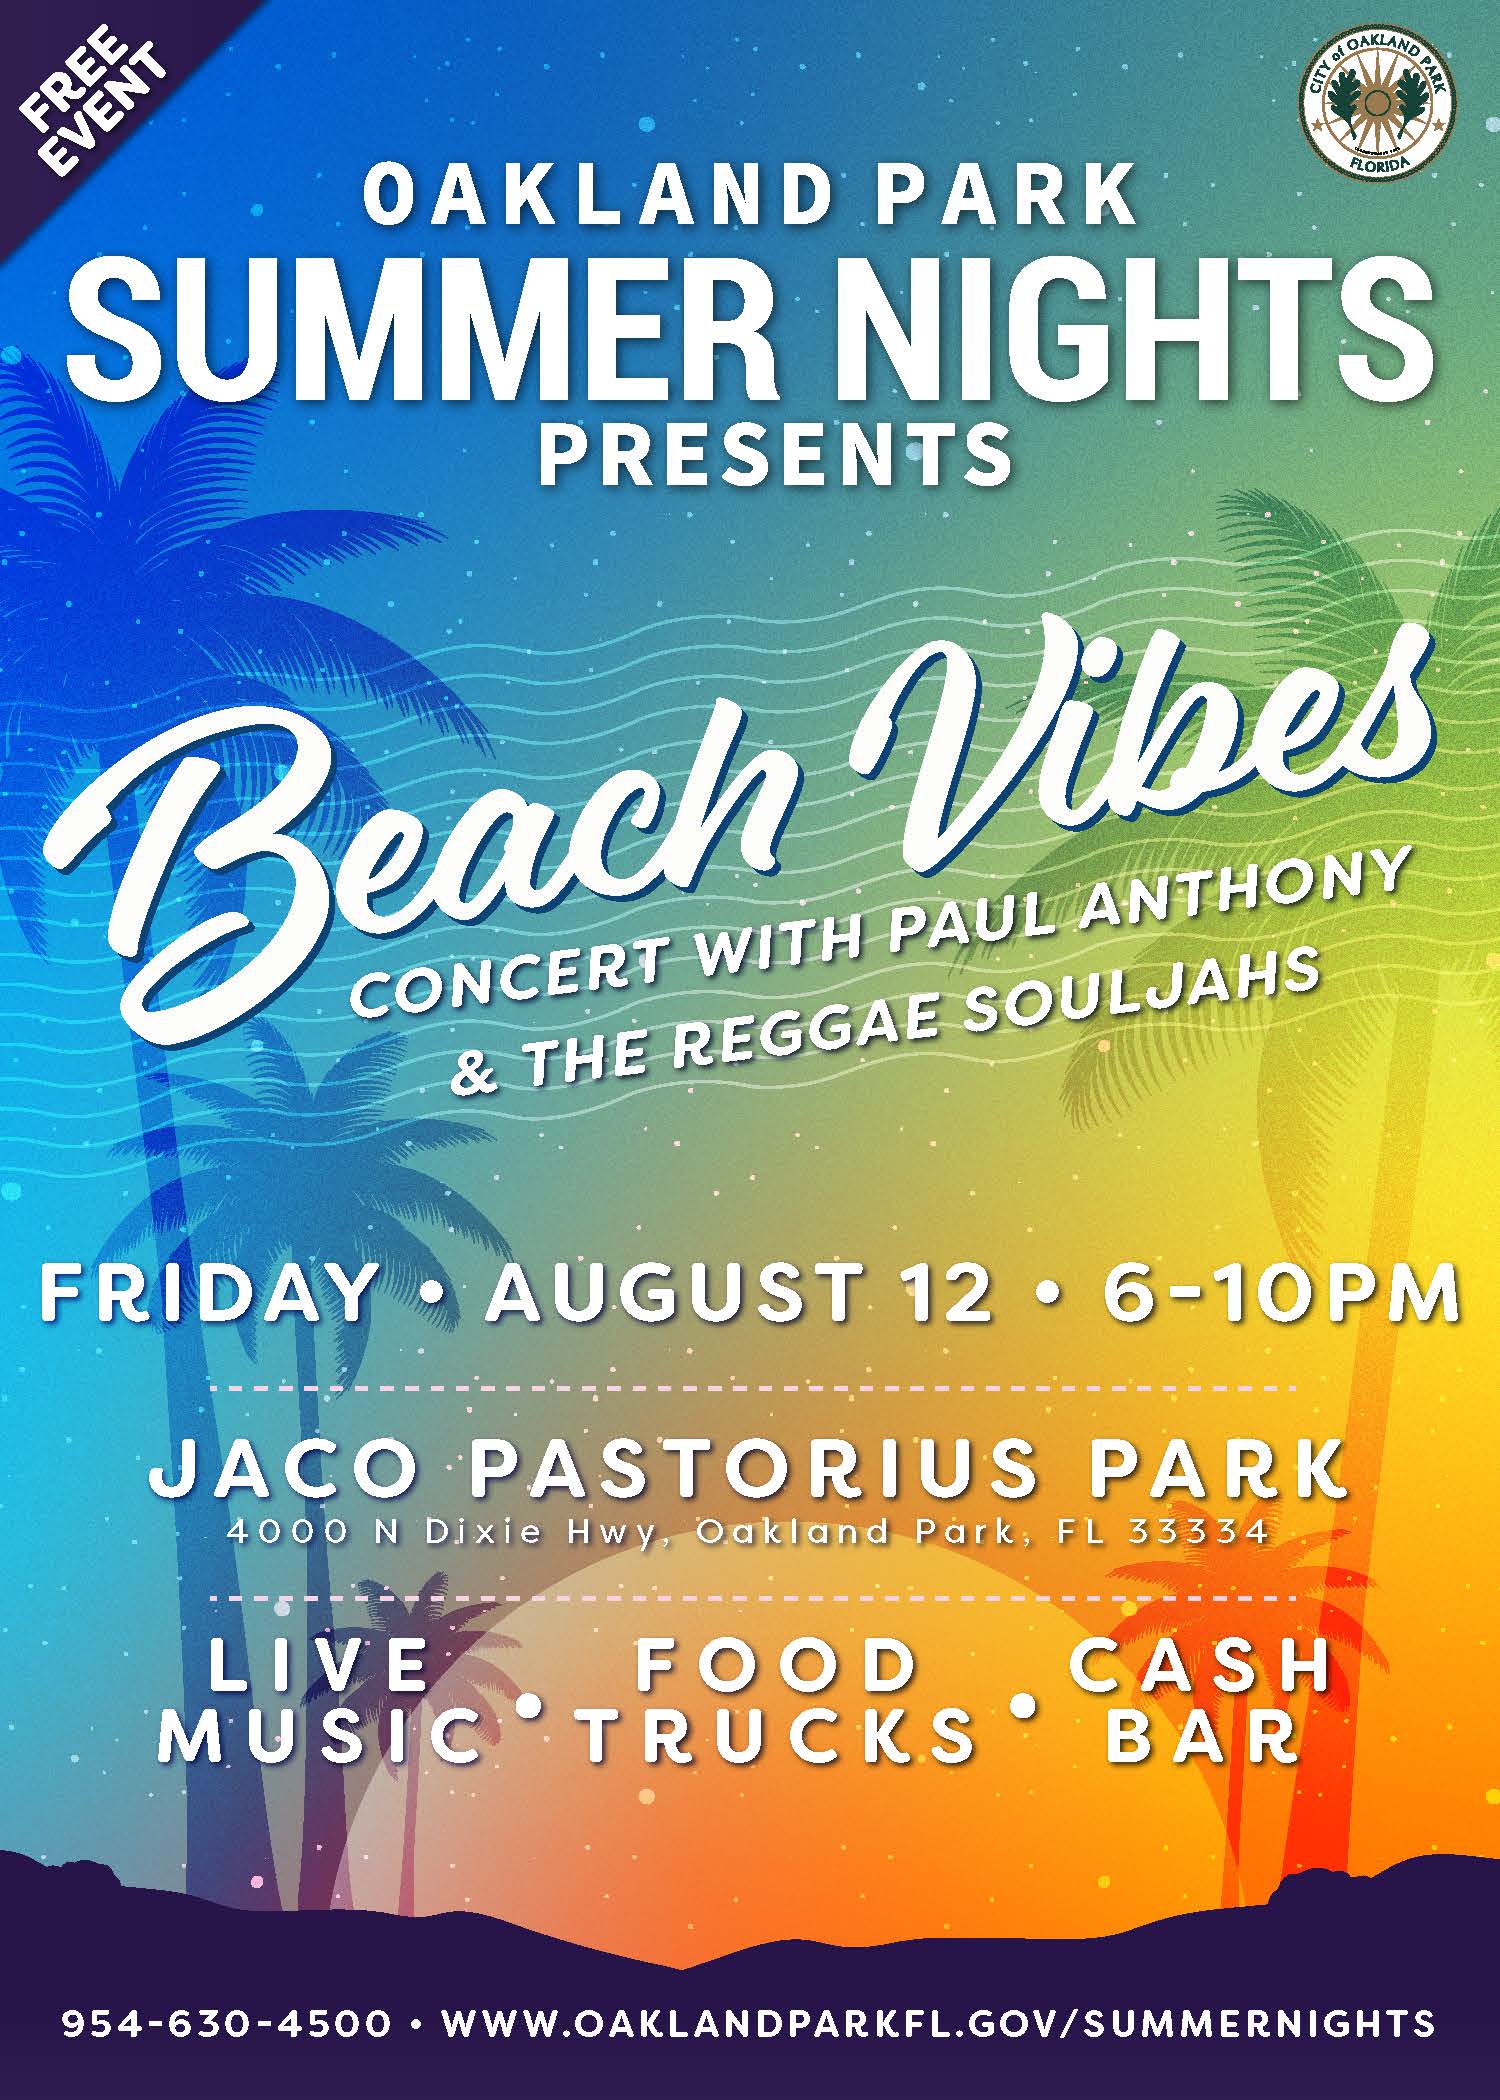 Summer Nights: Florida Summer Event